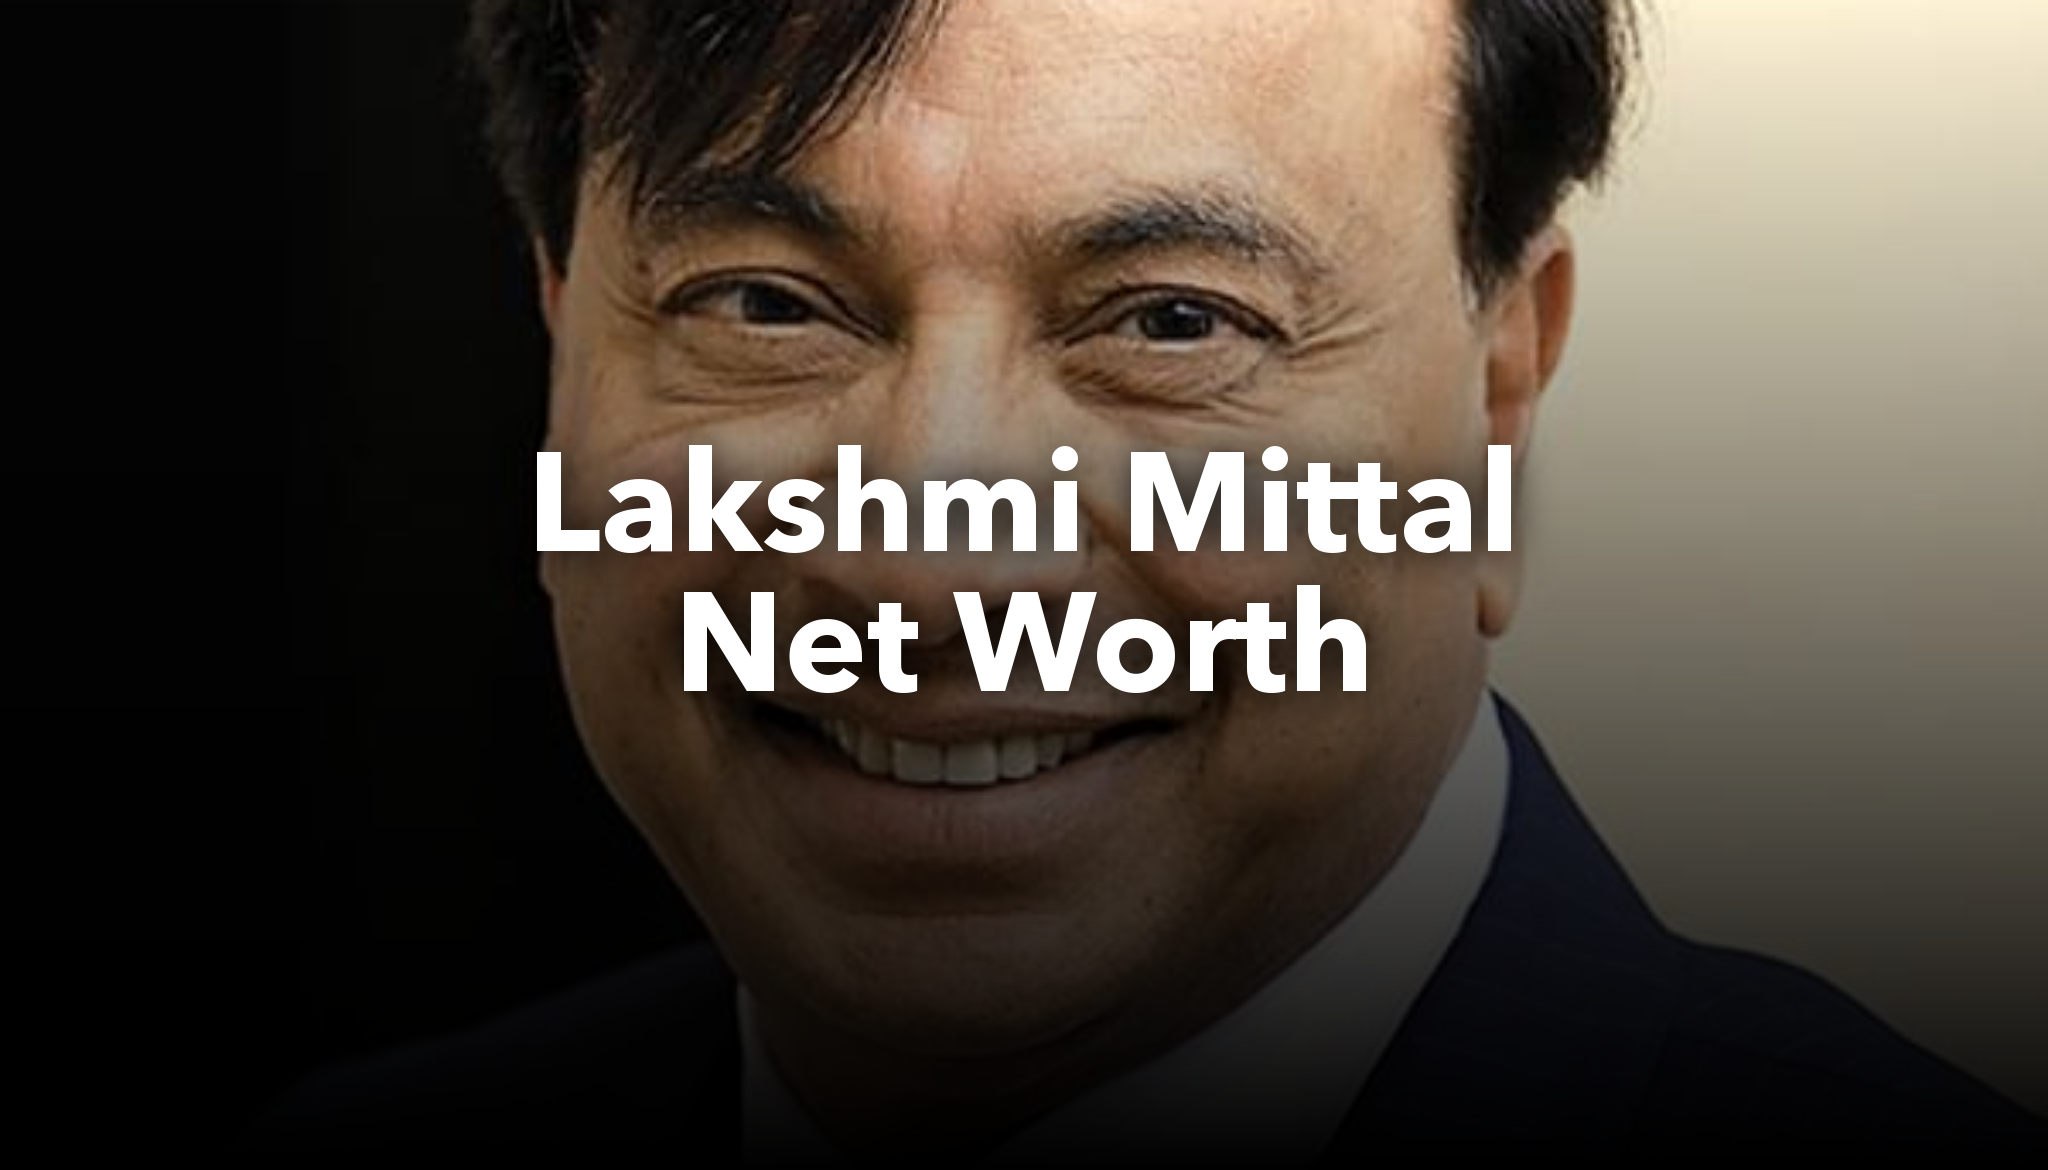 Lakshmi Mittal Net Worth - How Much is Mittal Worth?